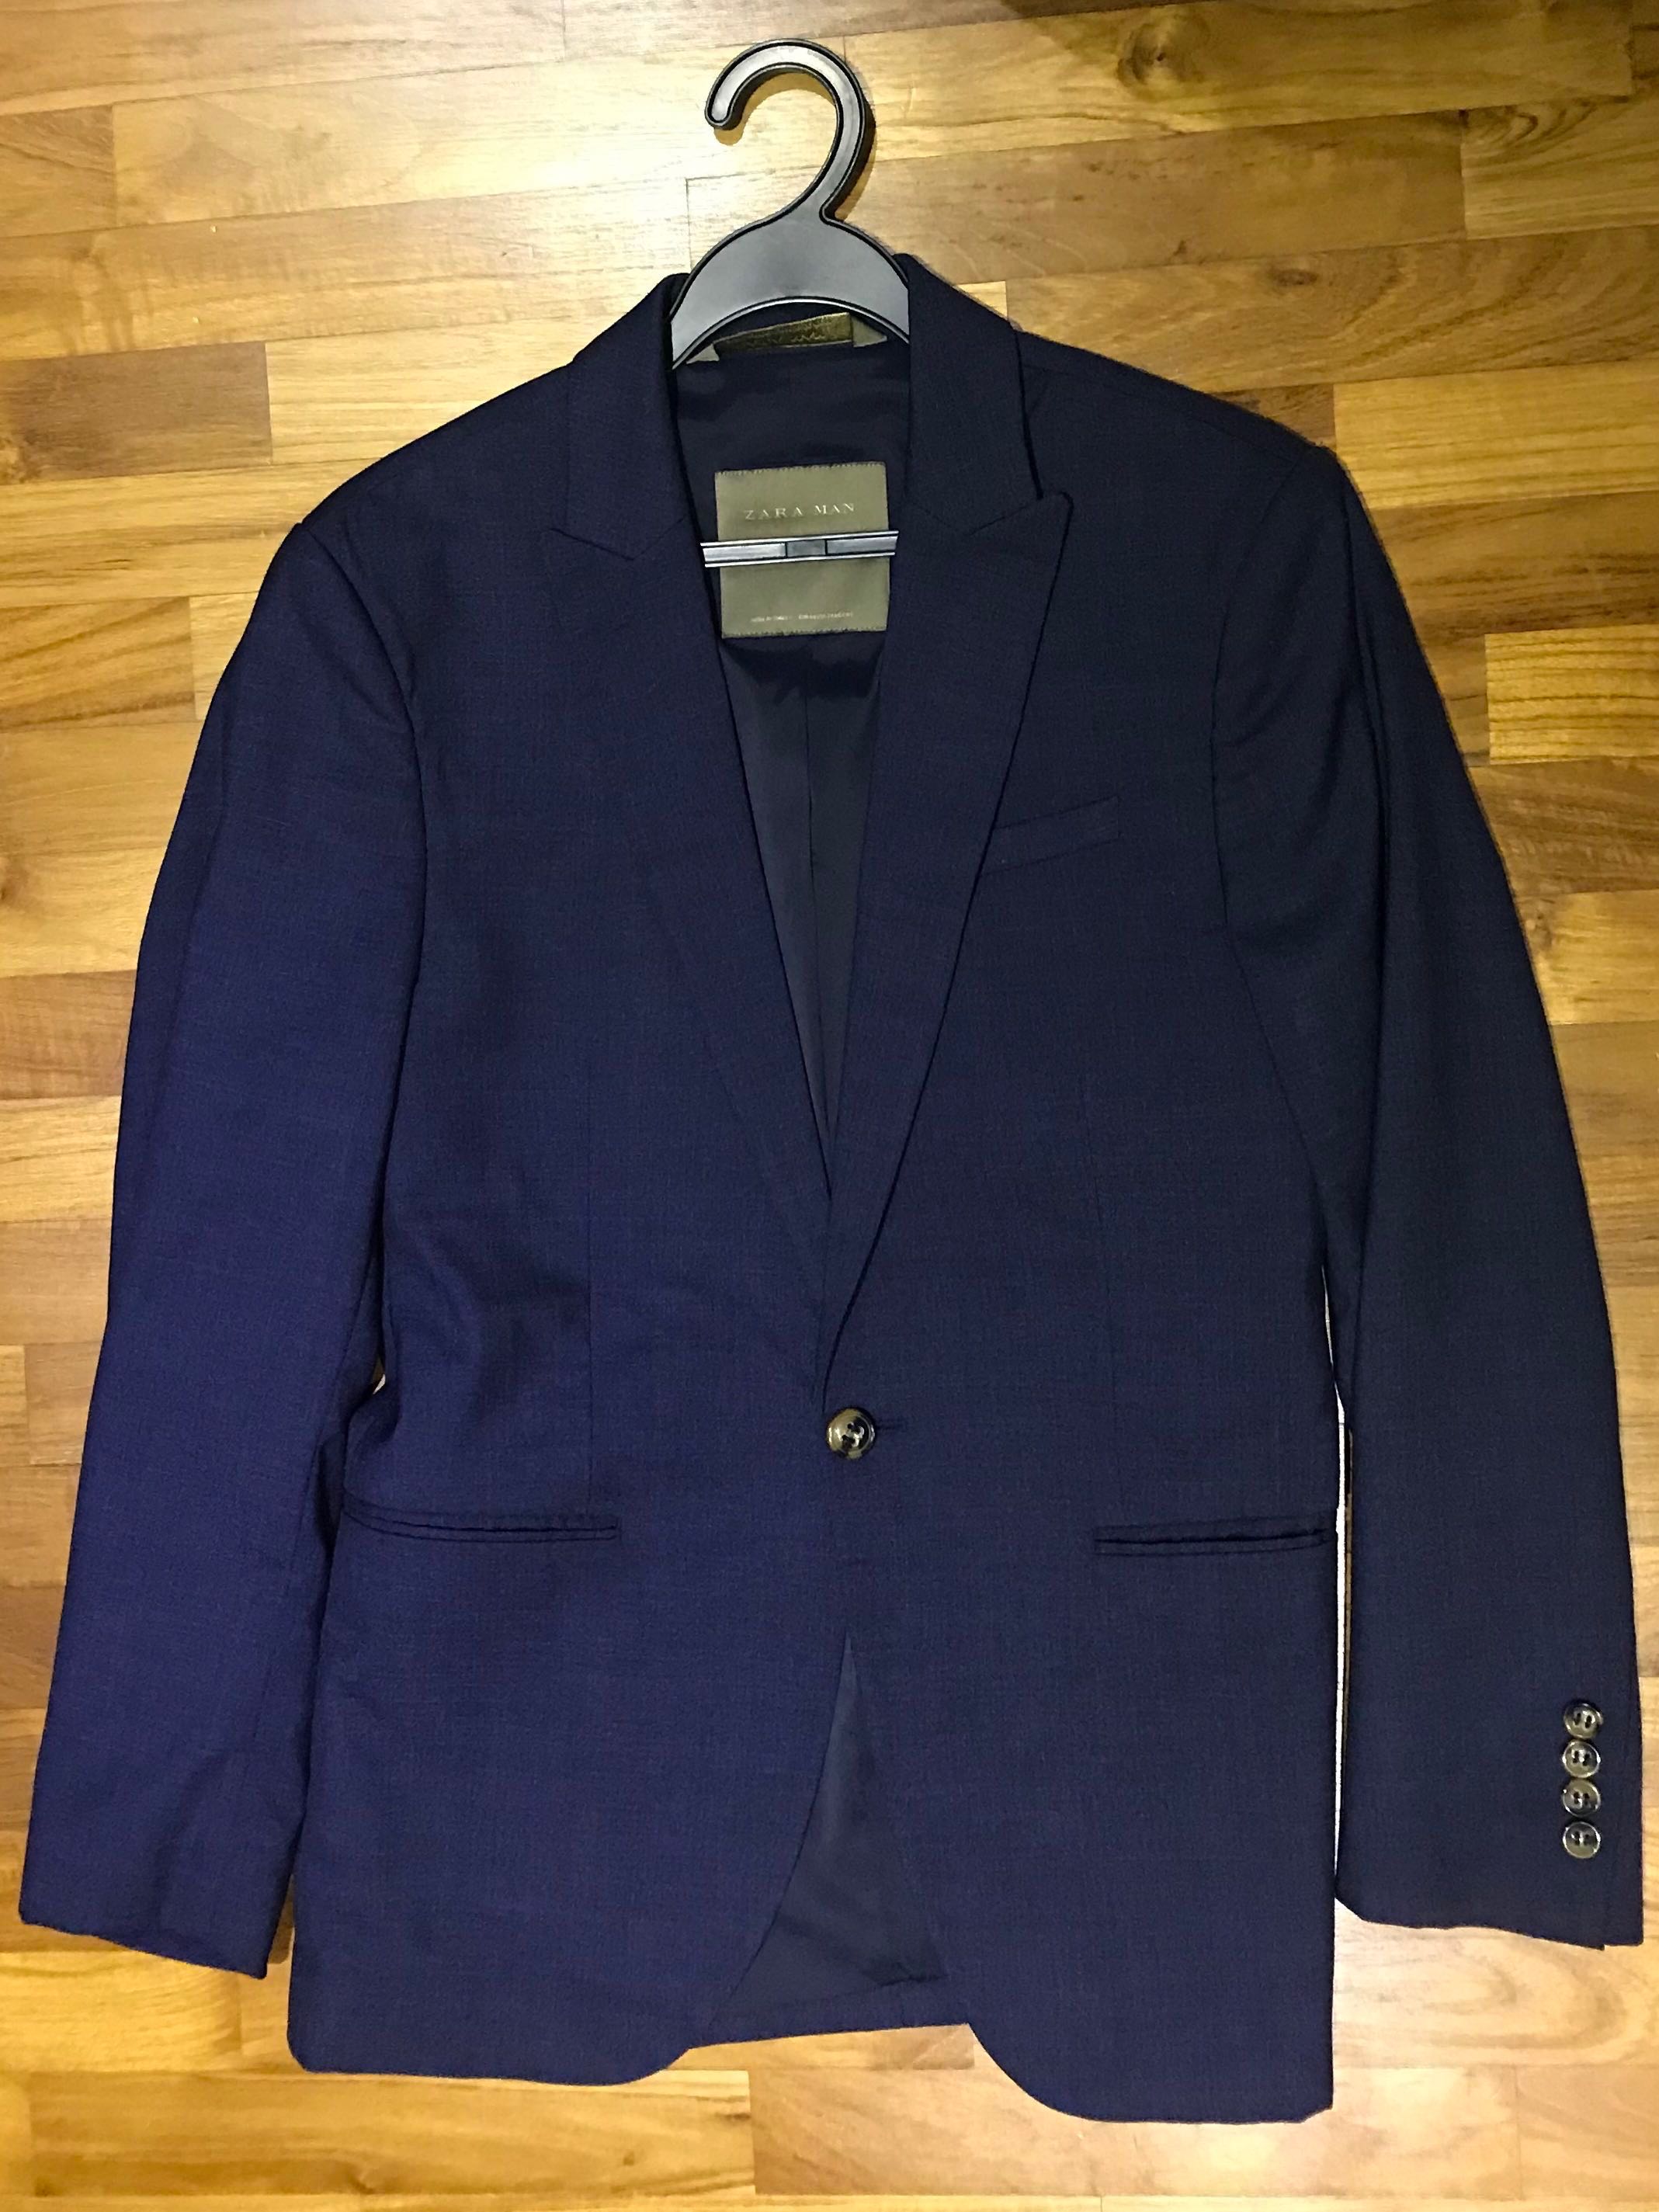 zara navy blue suit